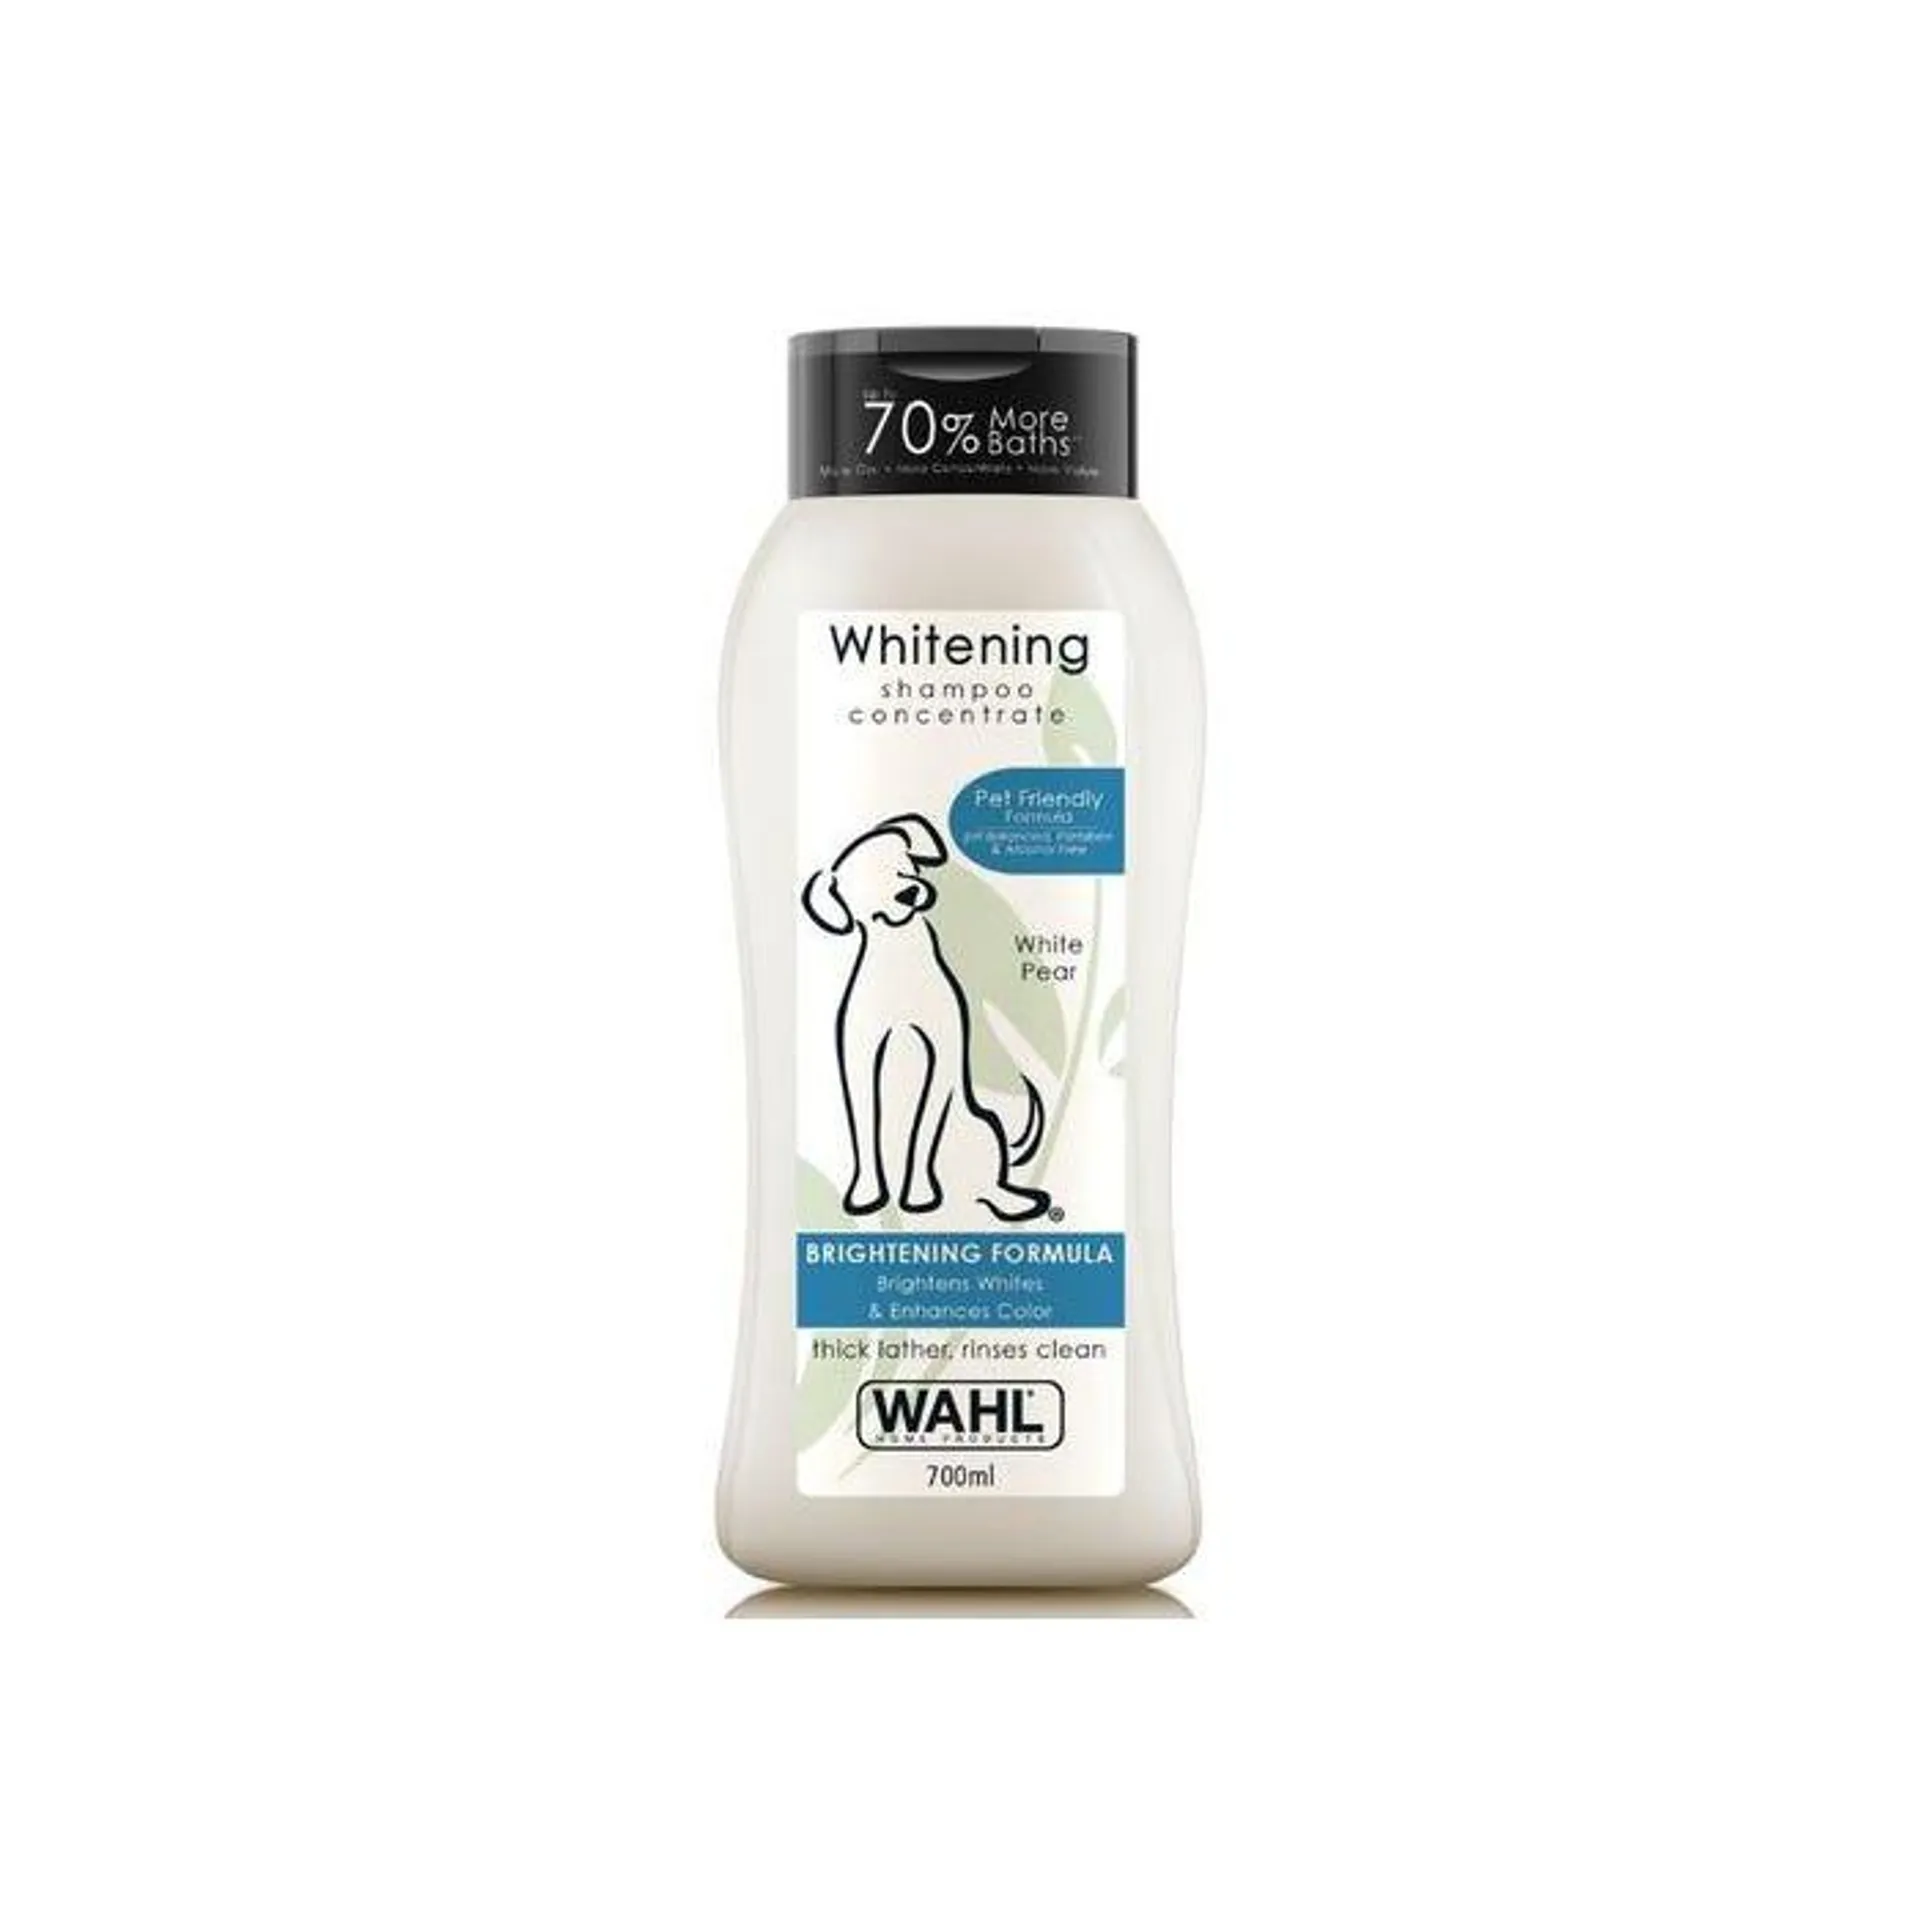 Wahl Whitening Shampoo 700ml